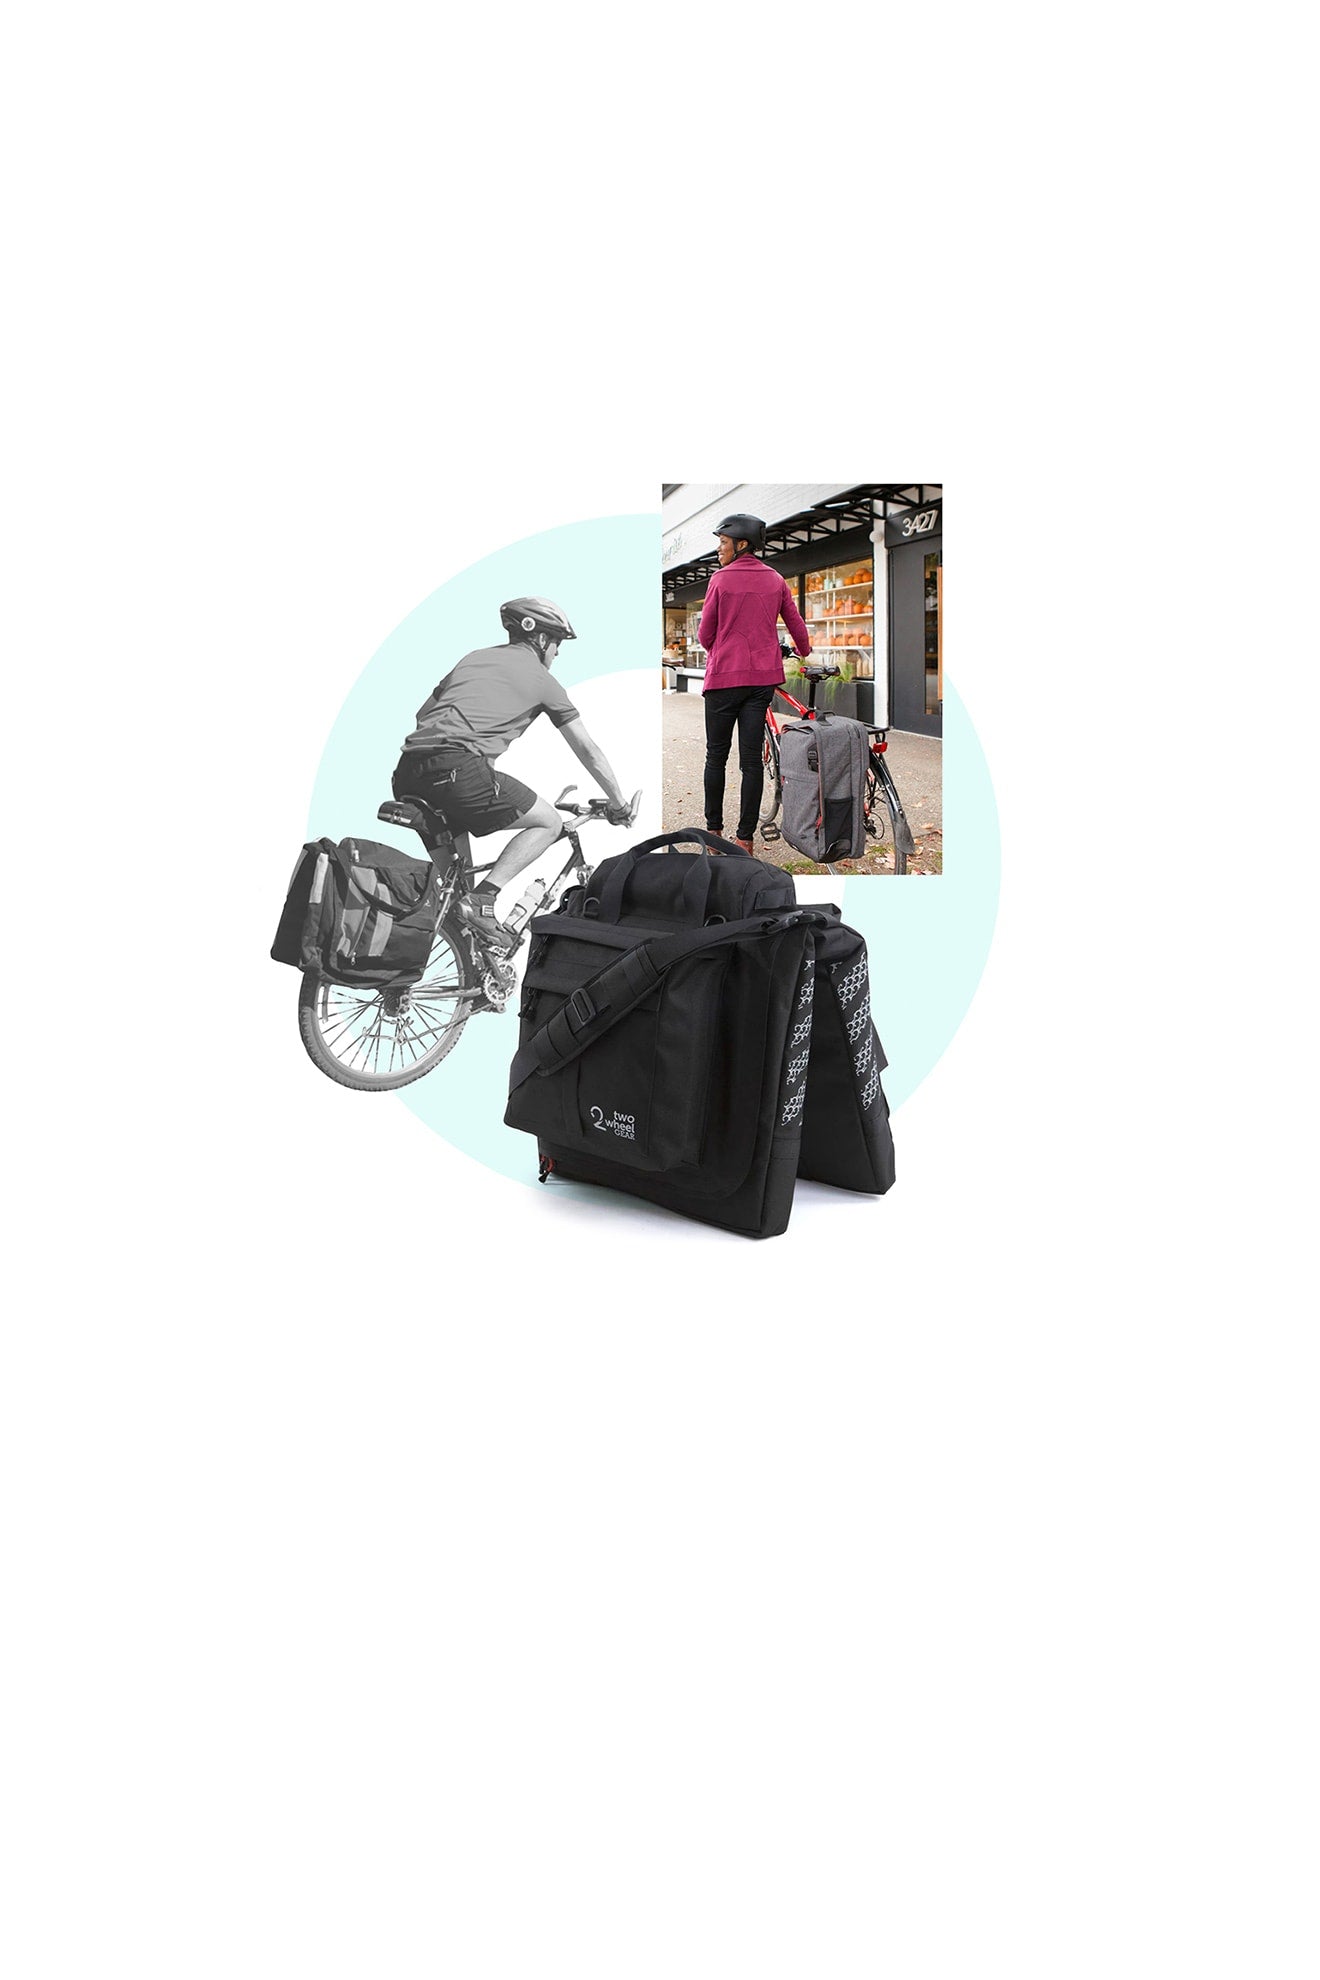 Panniers, Bike Bags & Backpacks for Commuters | Two Wheel Gear